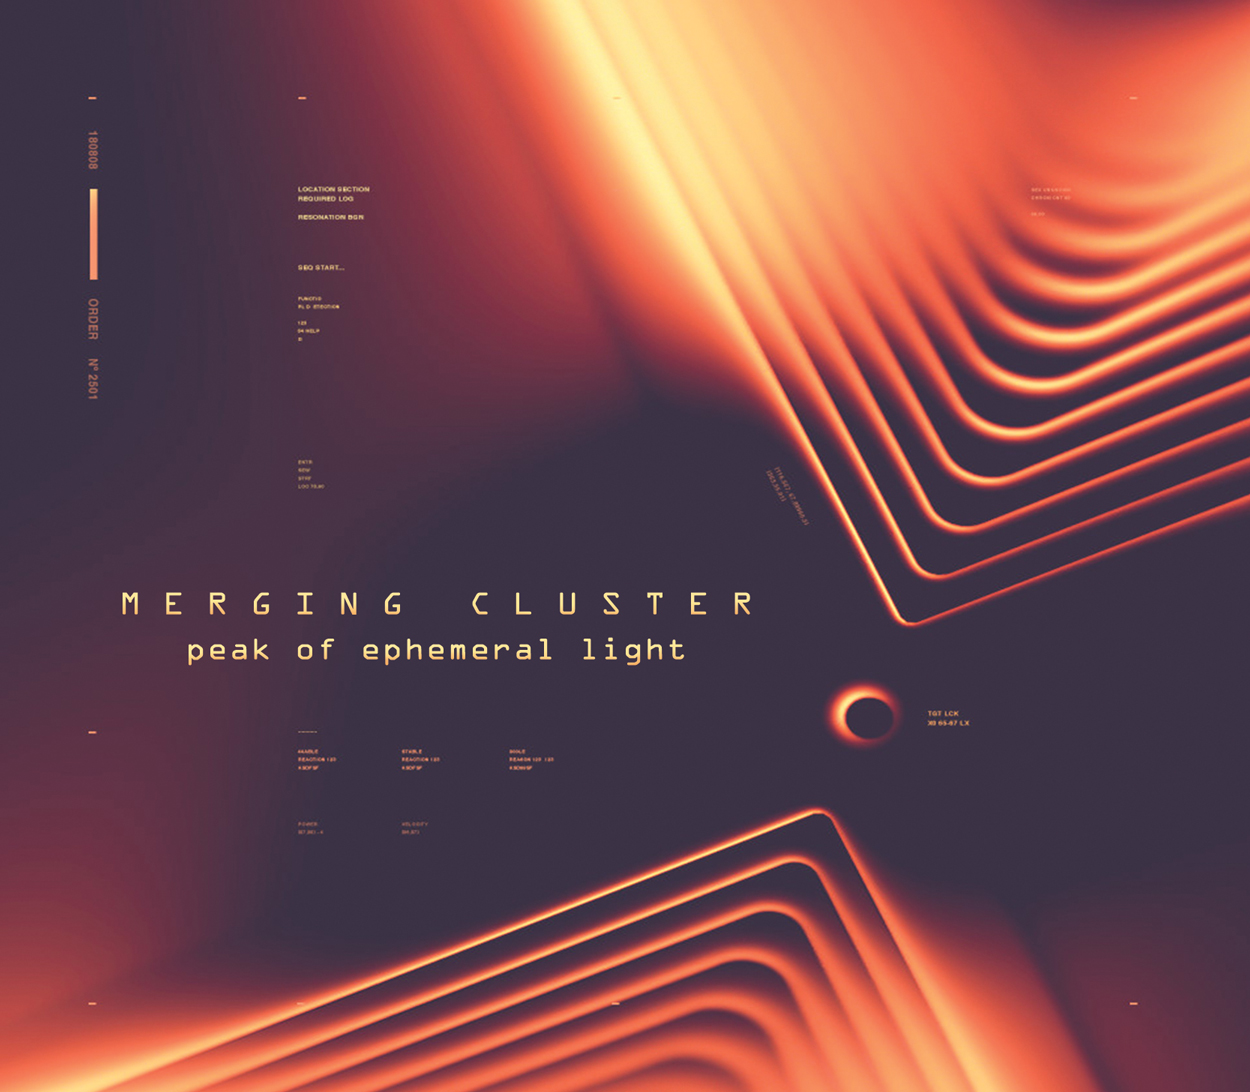 MERGING CLUSTER  "Peak ephemeral light" CD